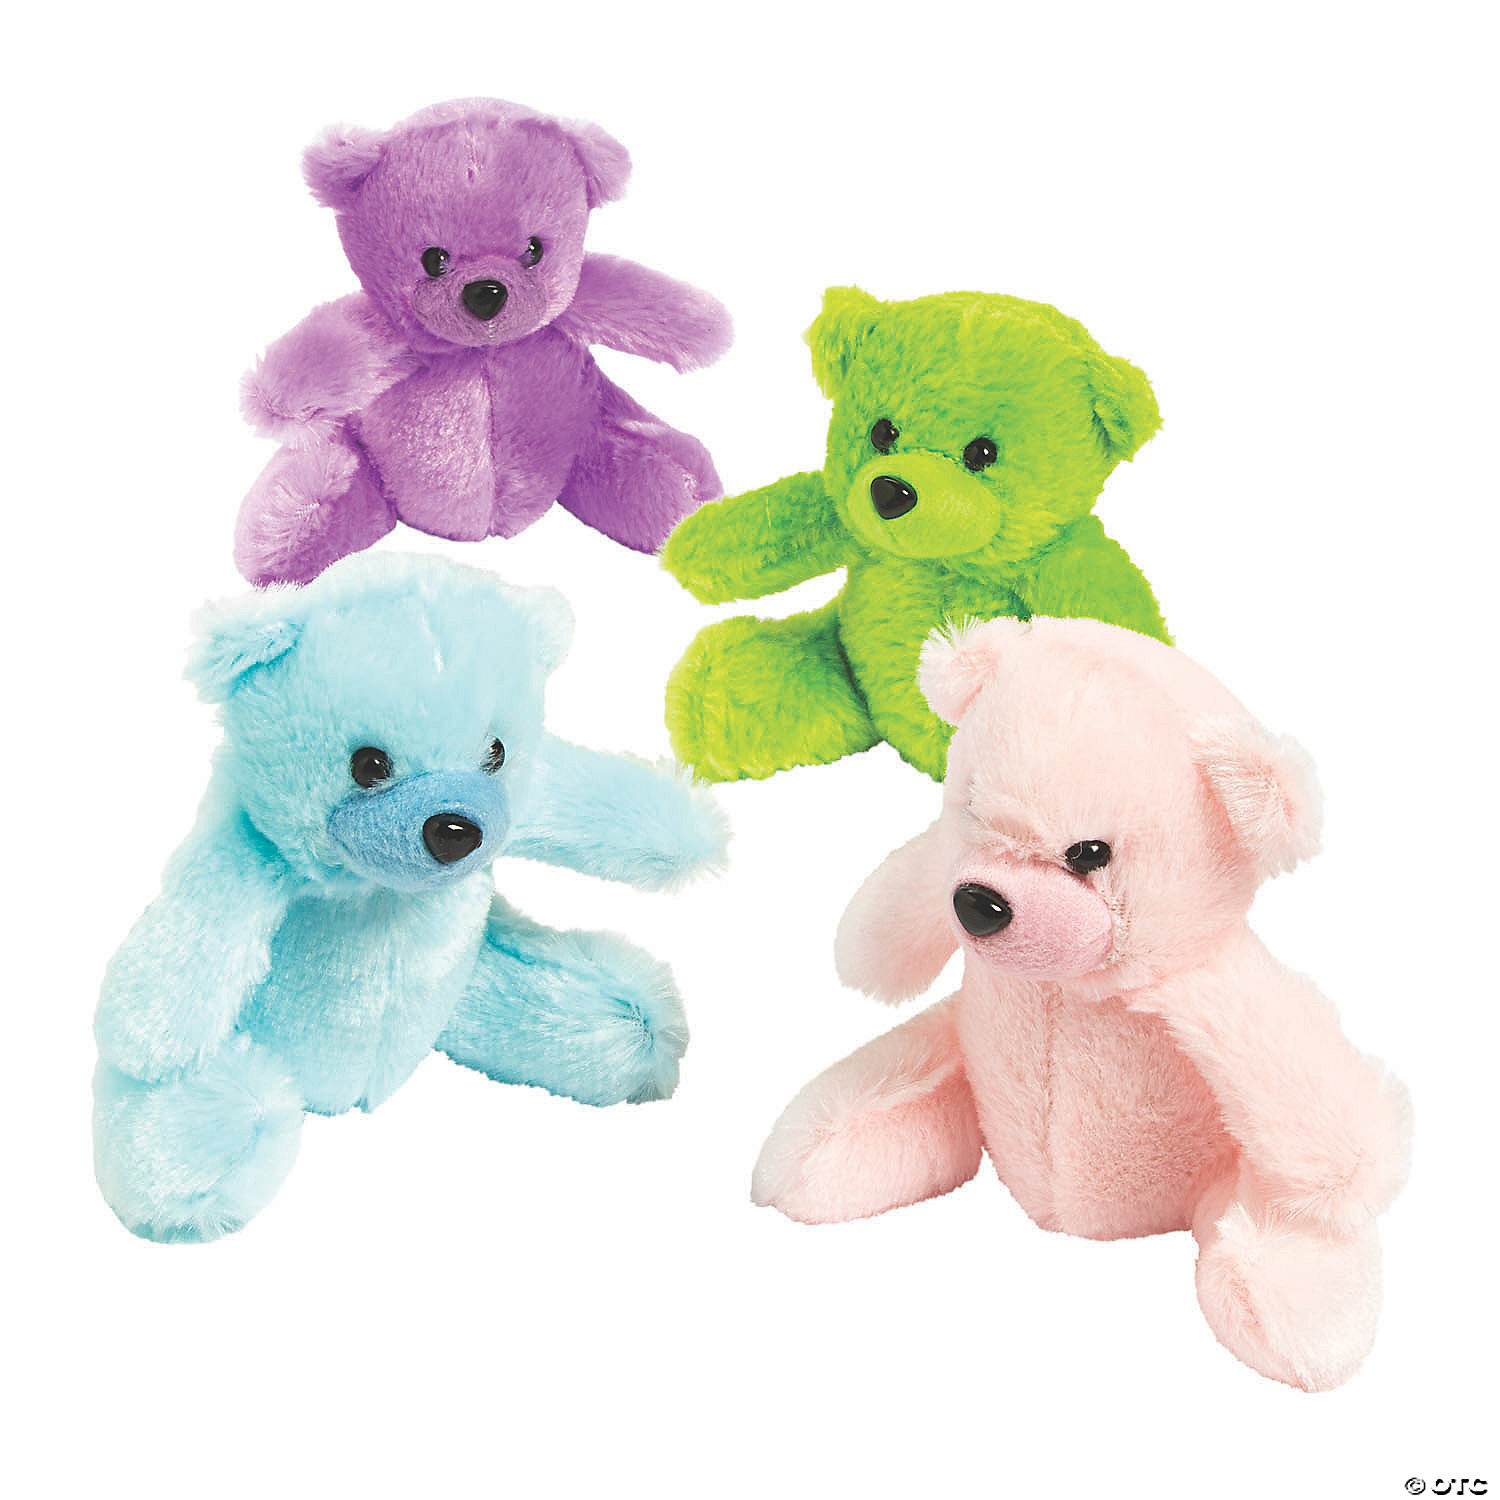 cuddly teddy bears for sale